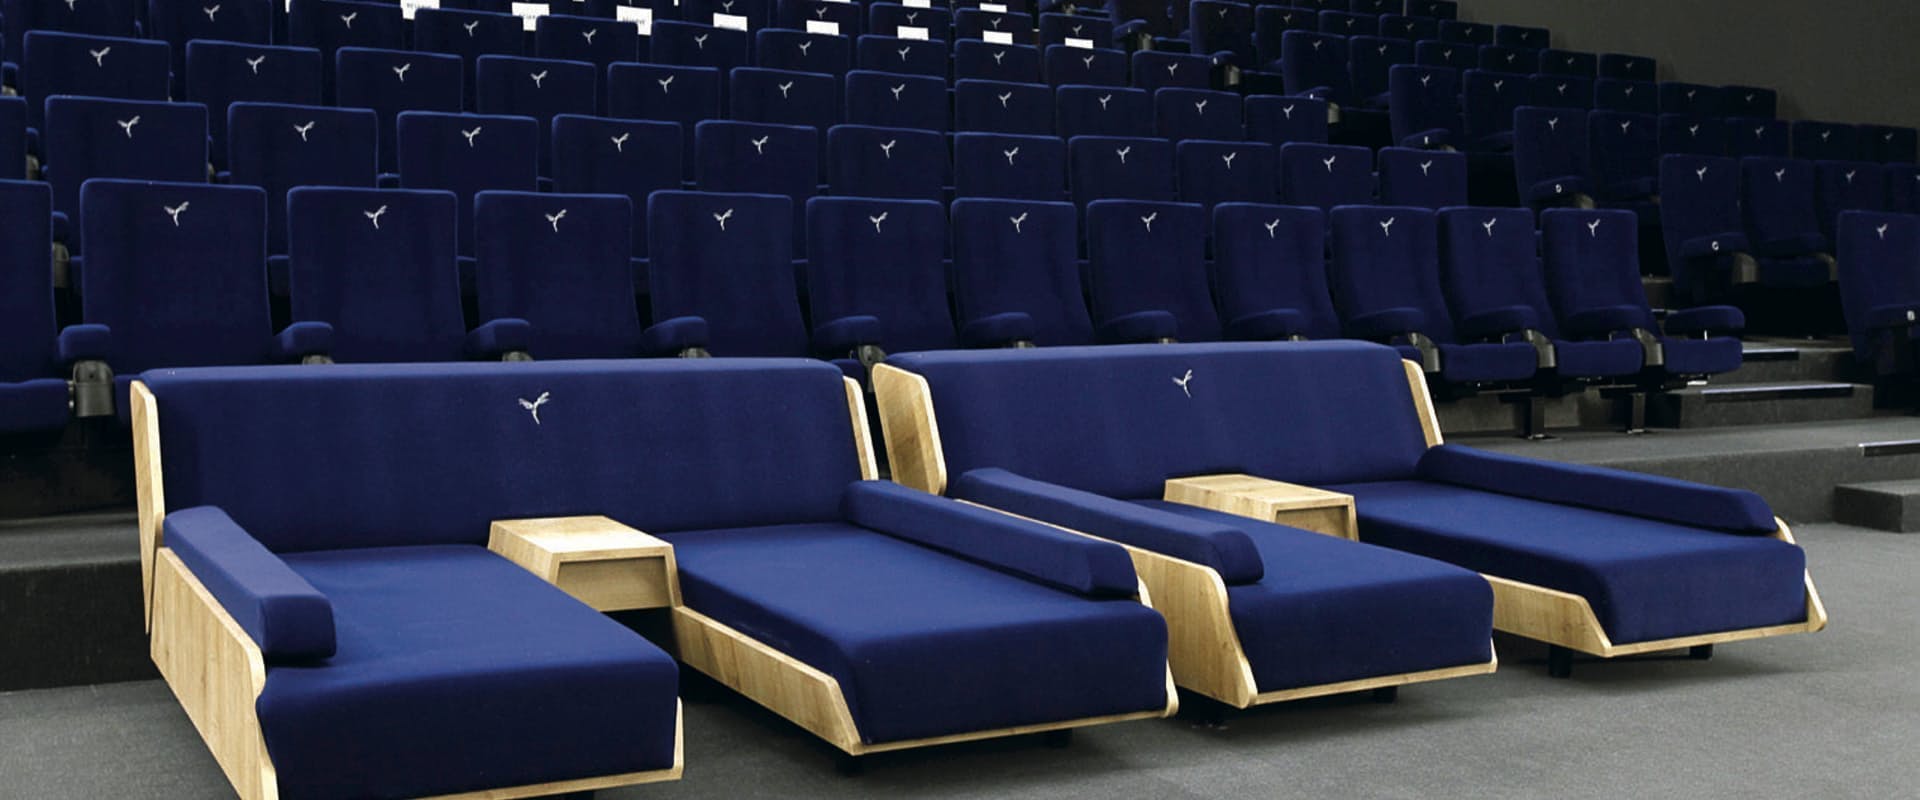 interior design indoors couch furniture room chair cushion theater auditorium hall